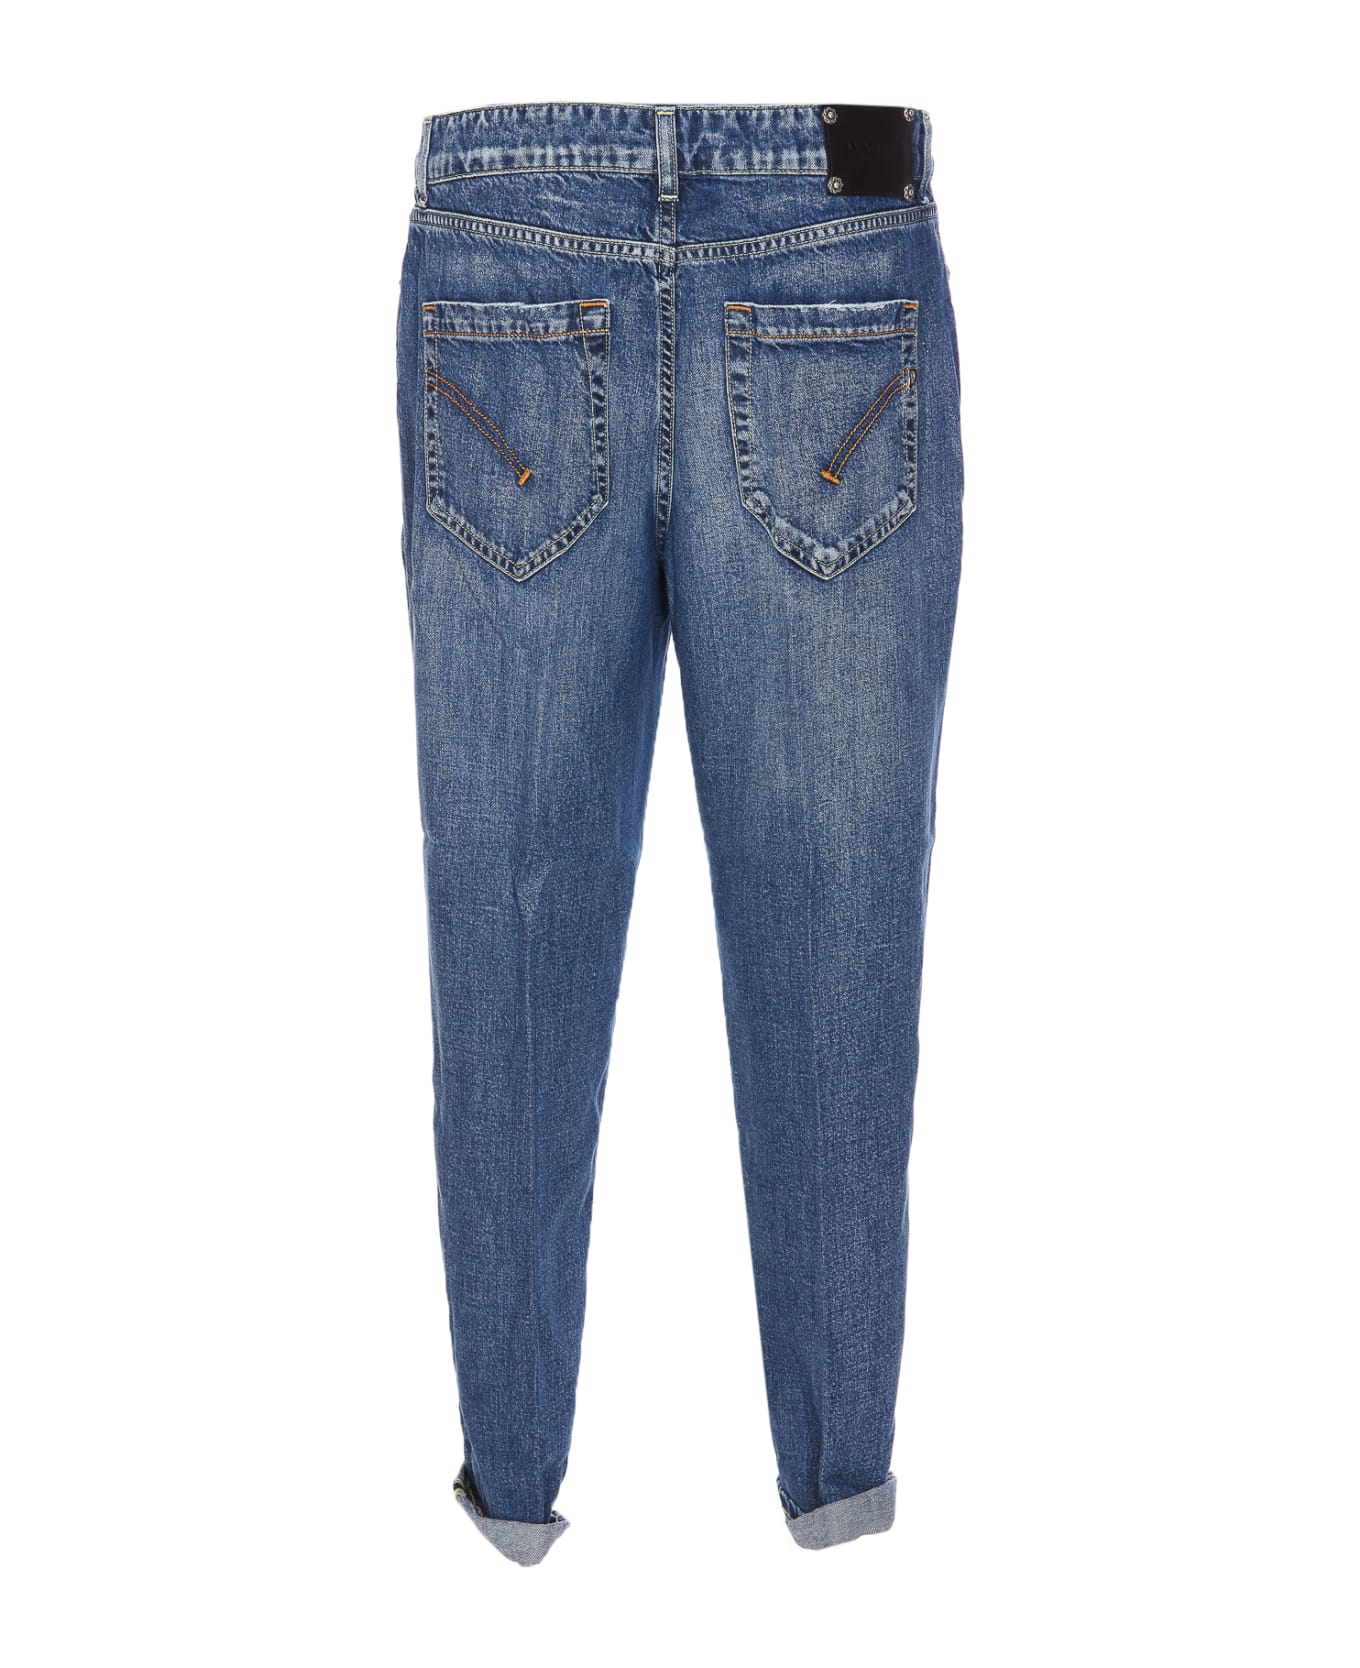 Dondup Koons Gioiello Denim Jeans Pants - BLU